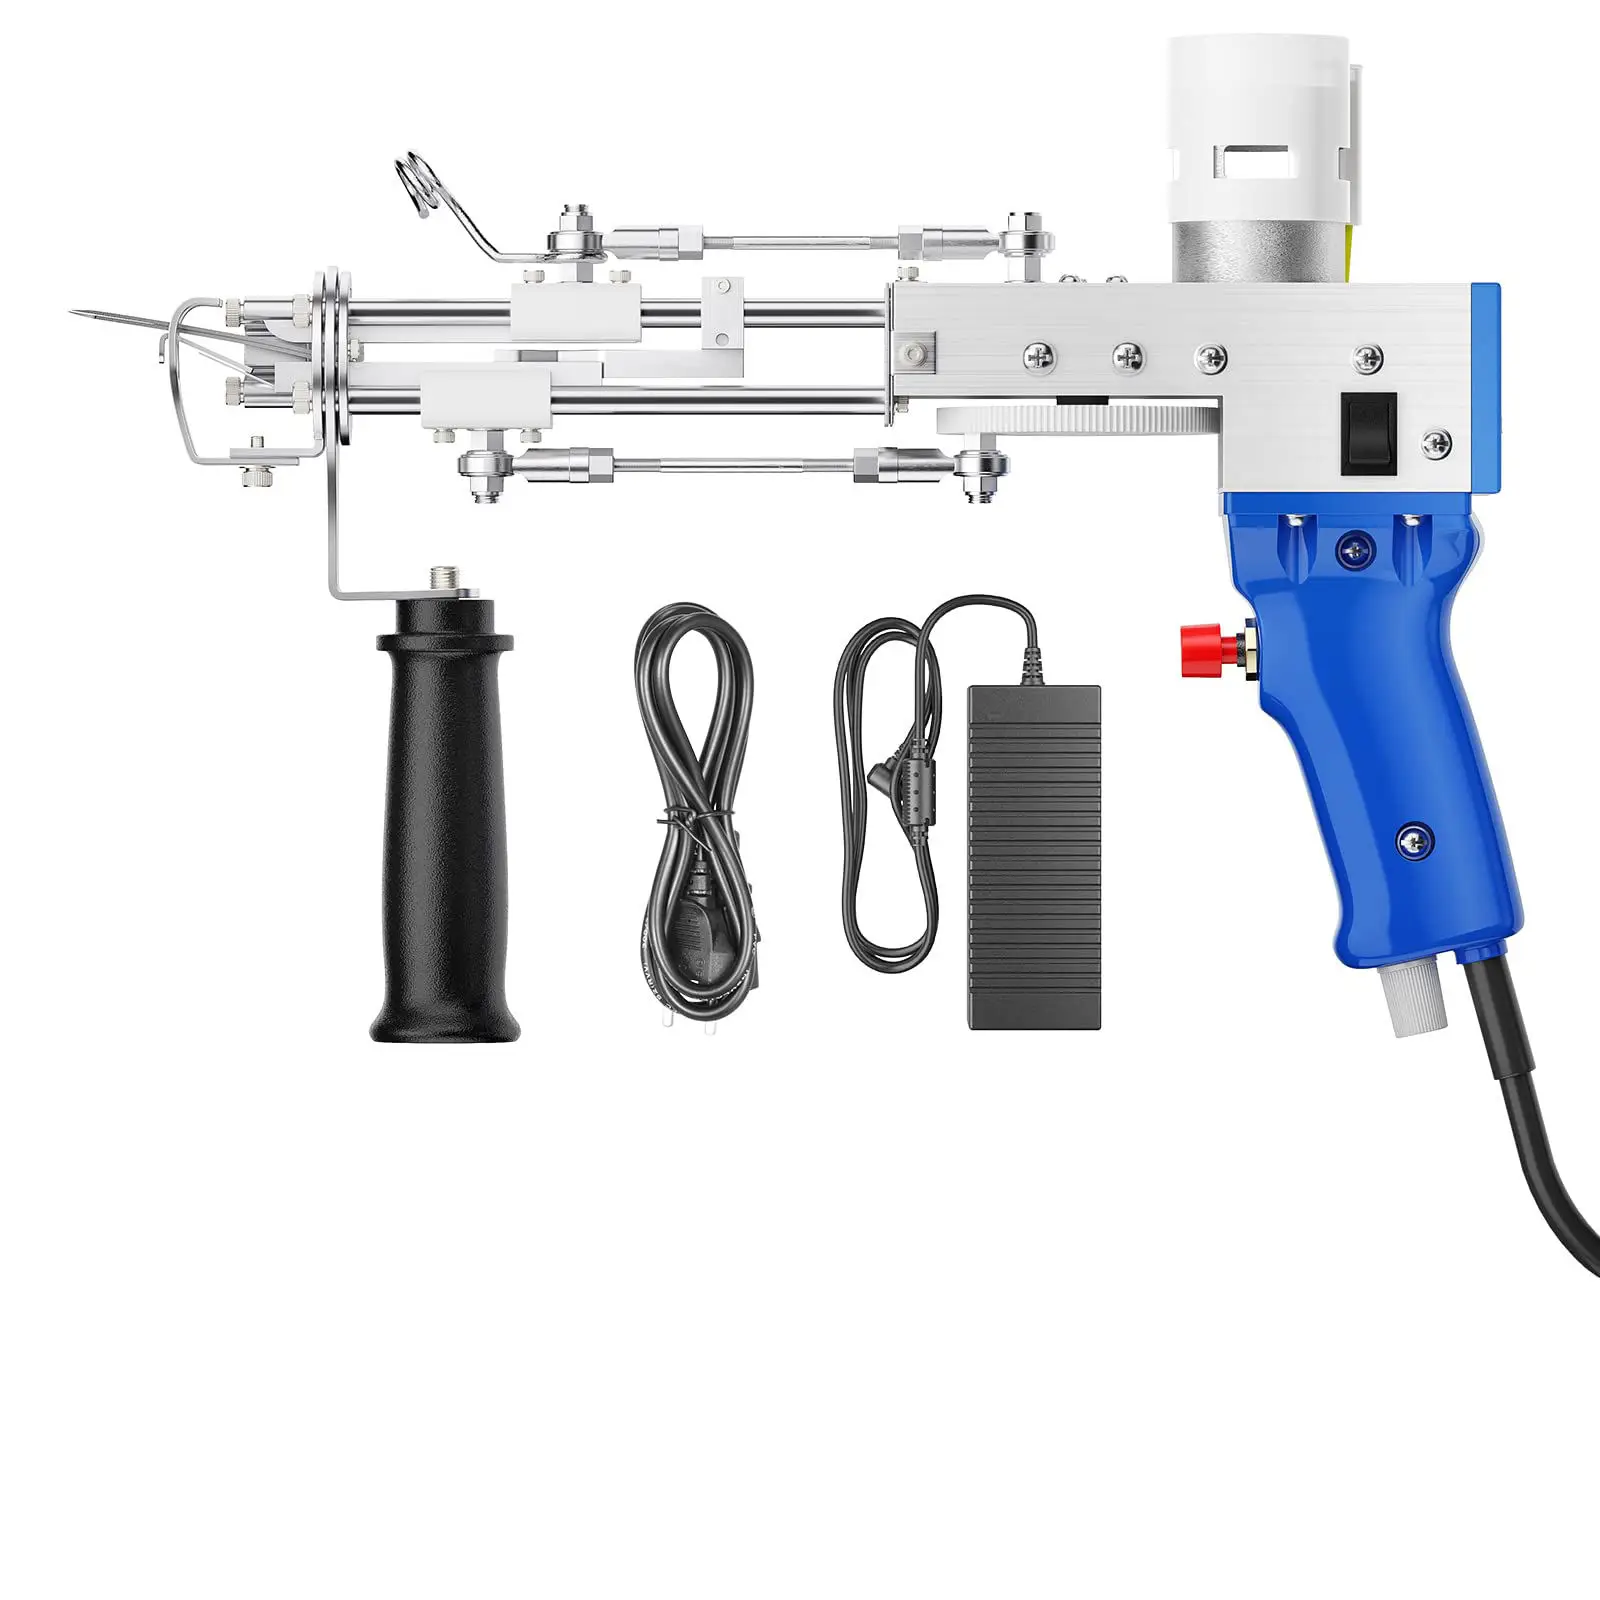 Hot Sale 2 in 1 Pistolas de mechones Electric Hand Rug Tufting Gun Making Machine Set for Carpet